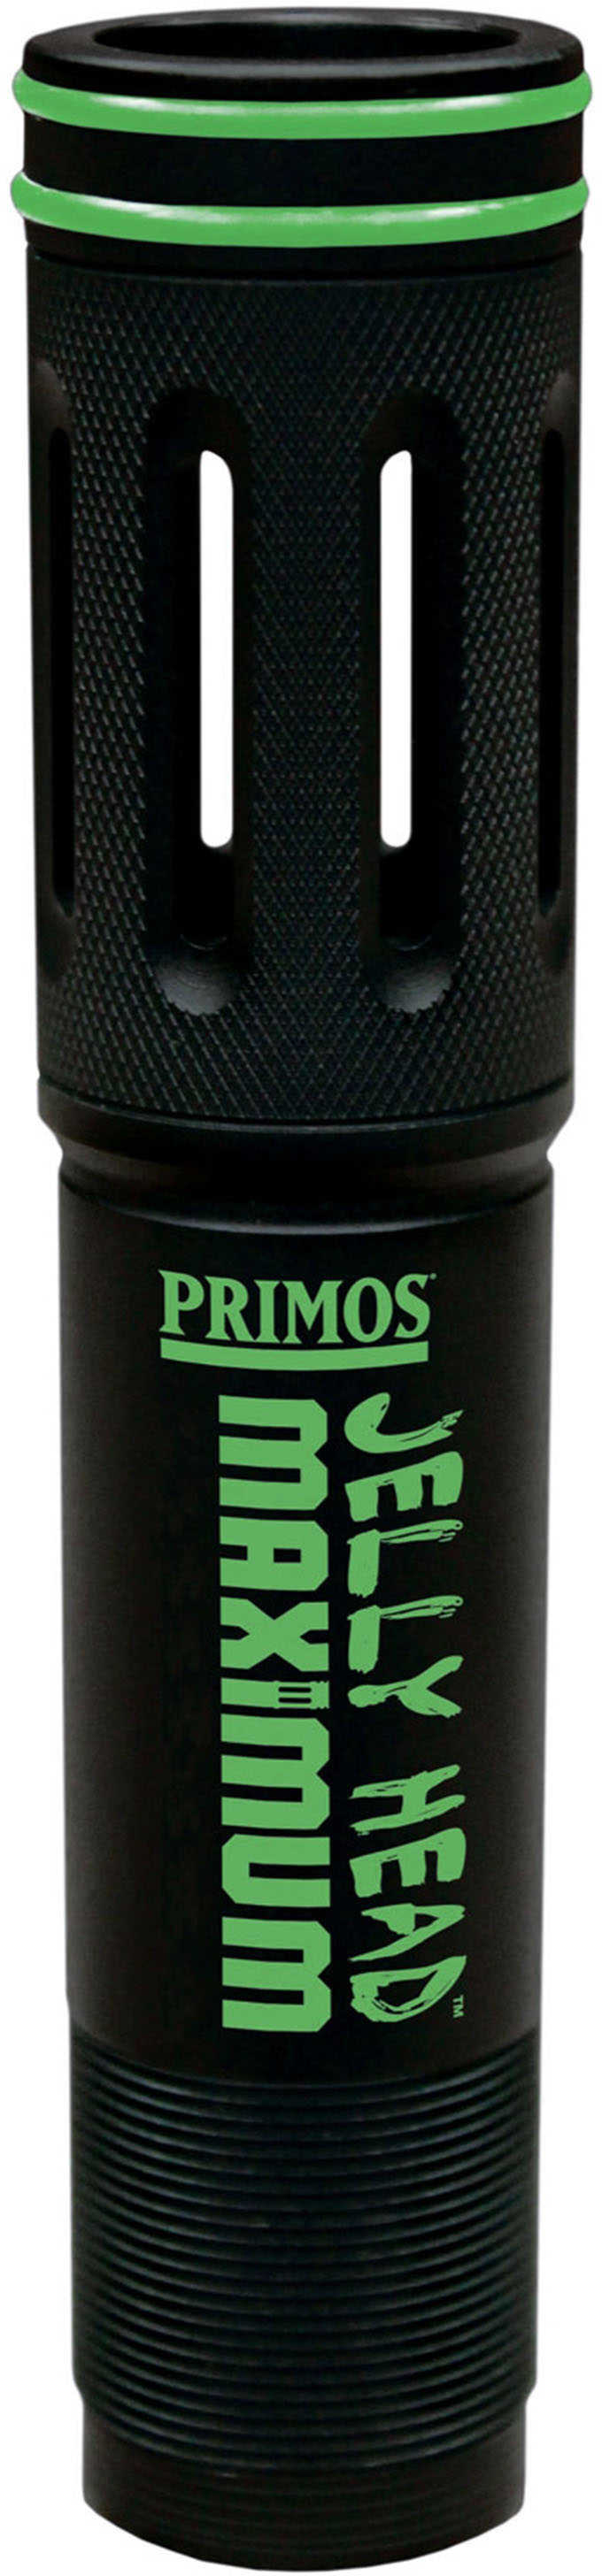 Primos Jelly Head Maximum Choke Tube Fits Benelli SBEII 12 Gauge XX-Full .660 Constriction Black 69407